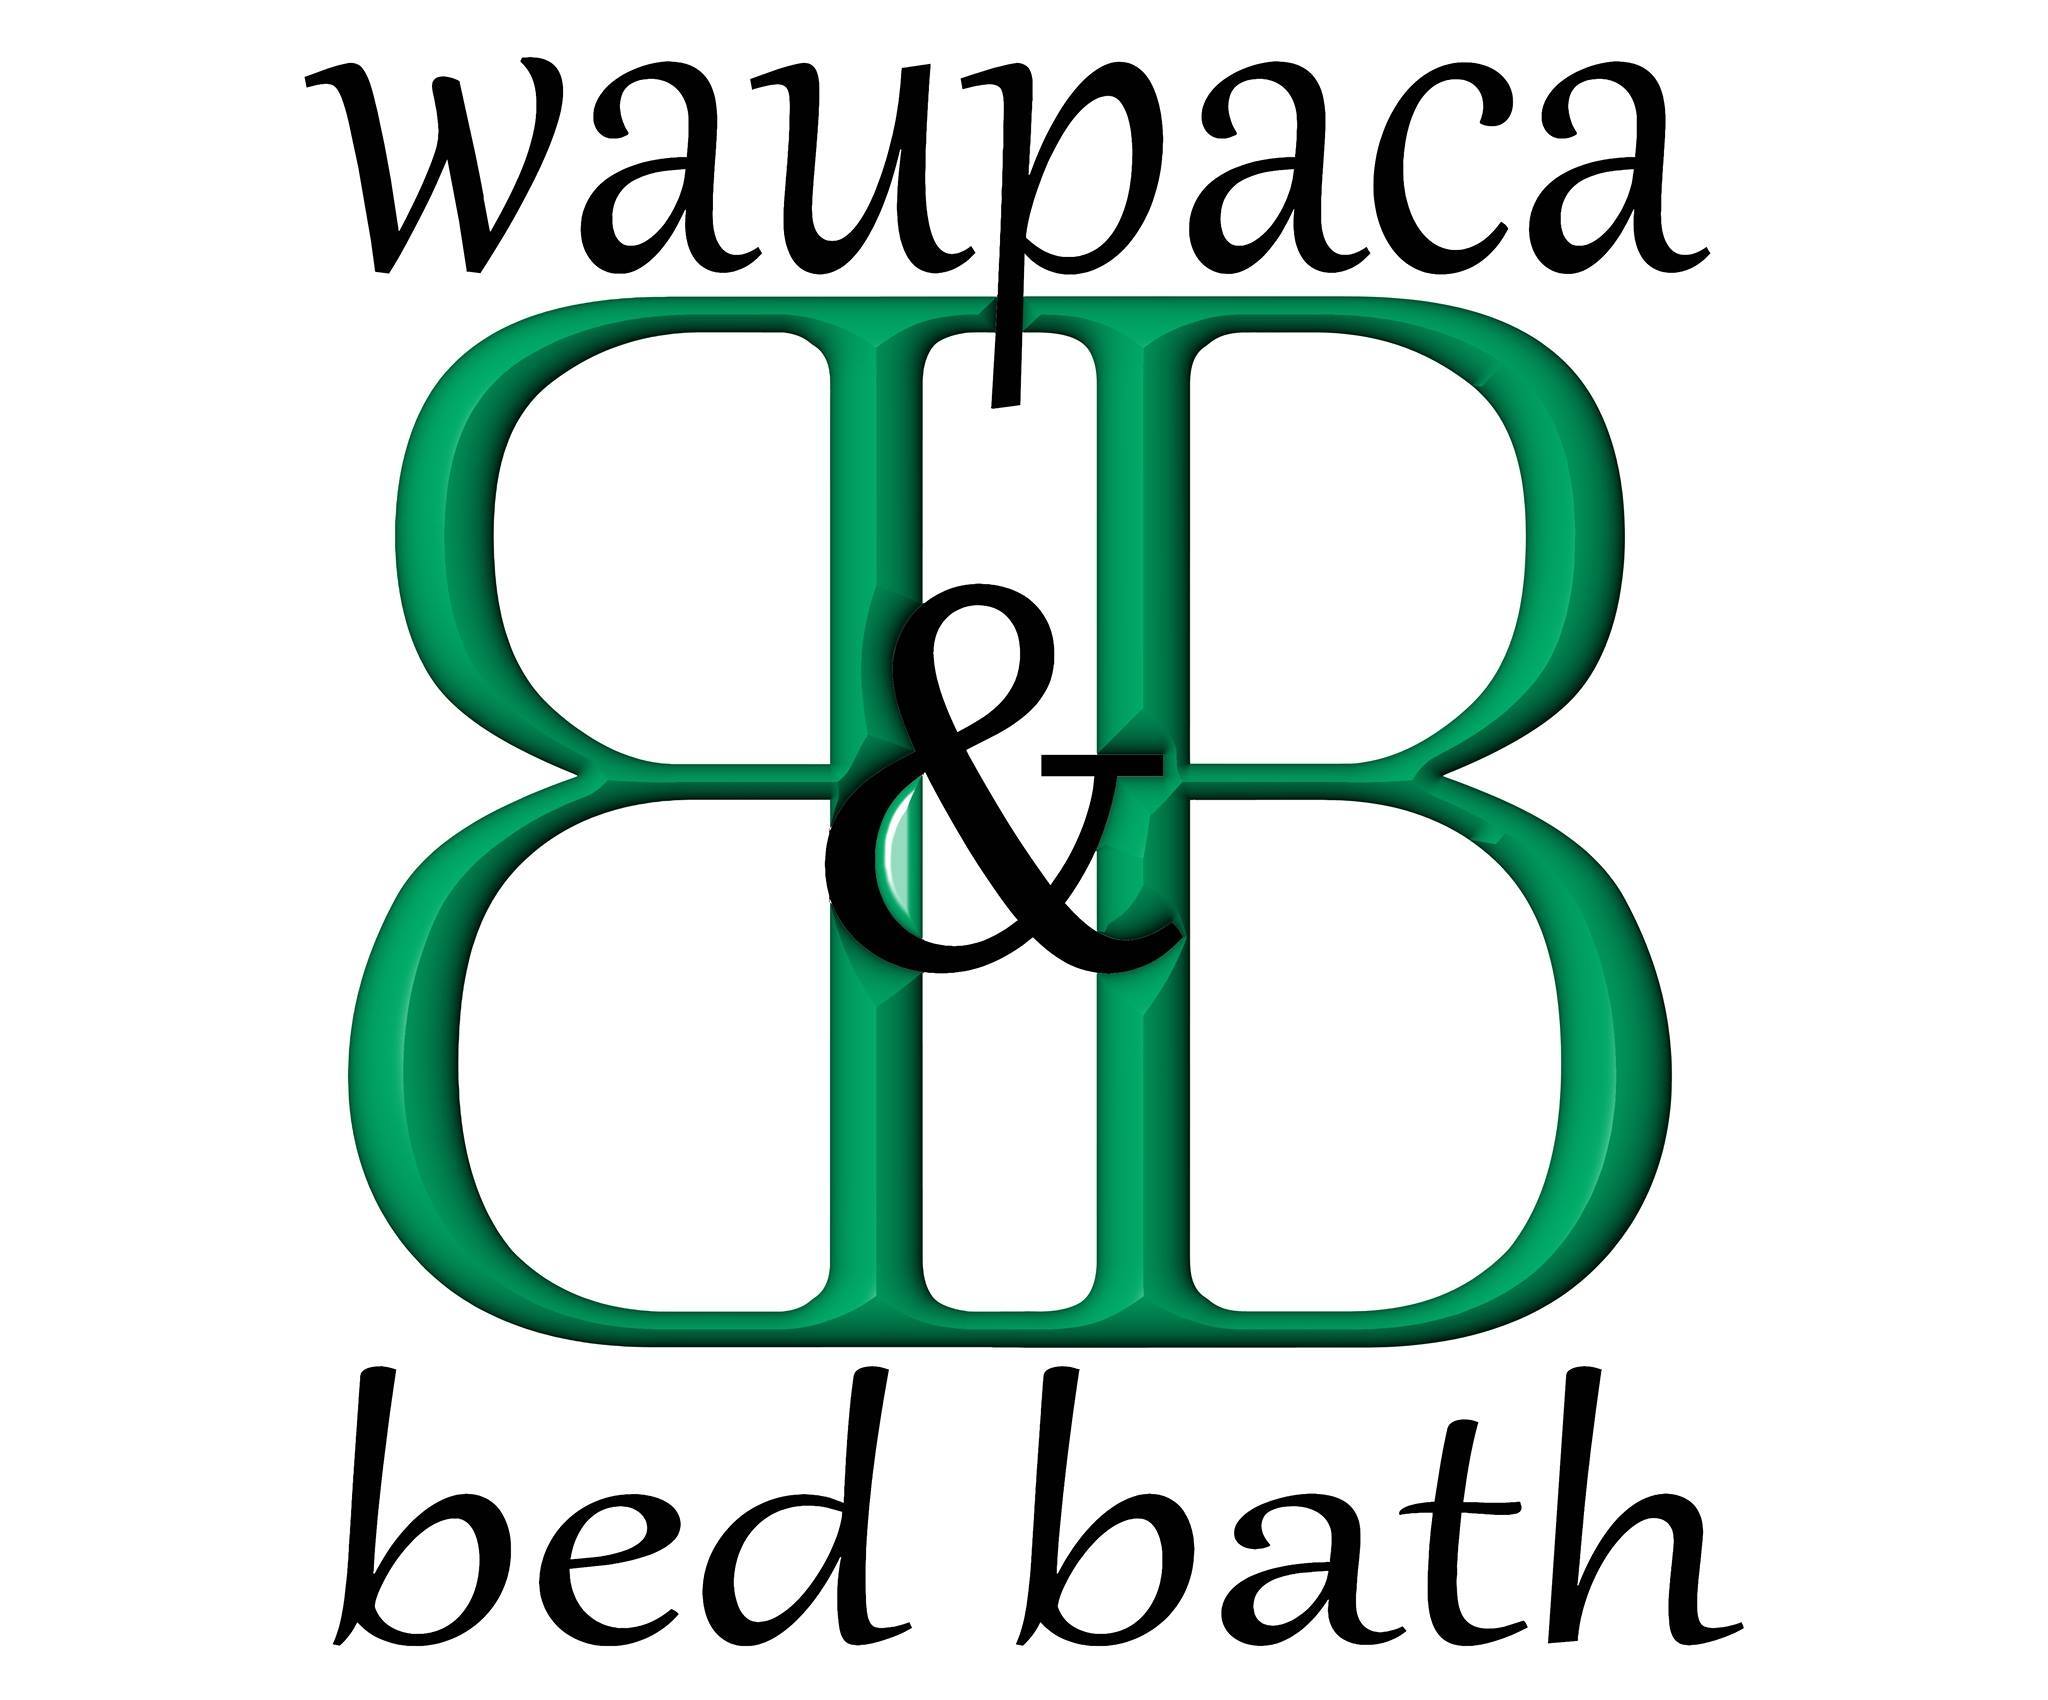 Waupaca Bed & Bath